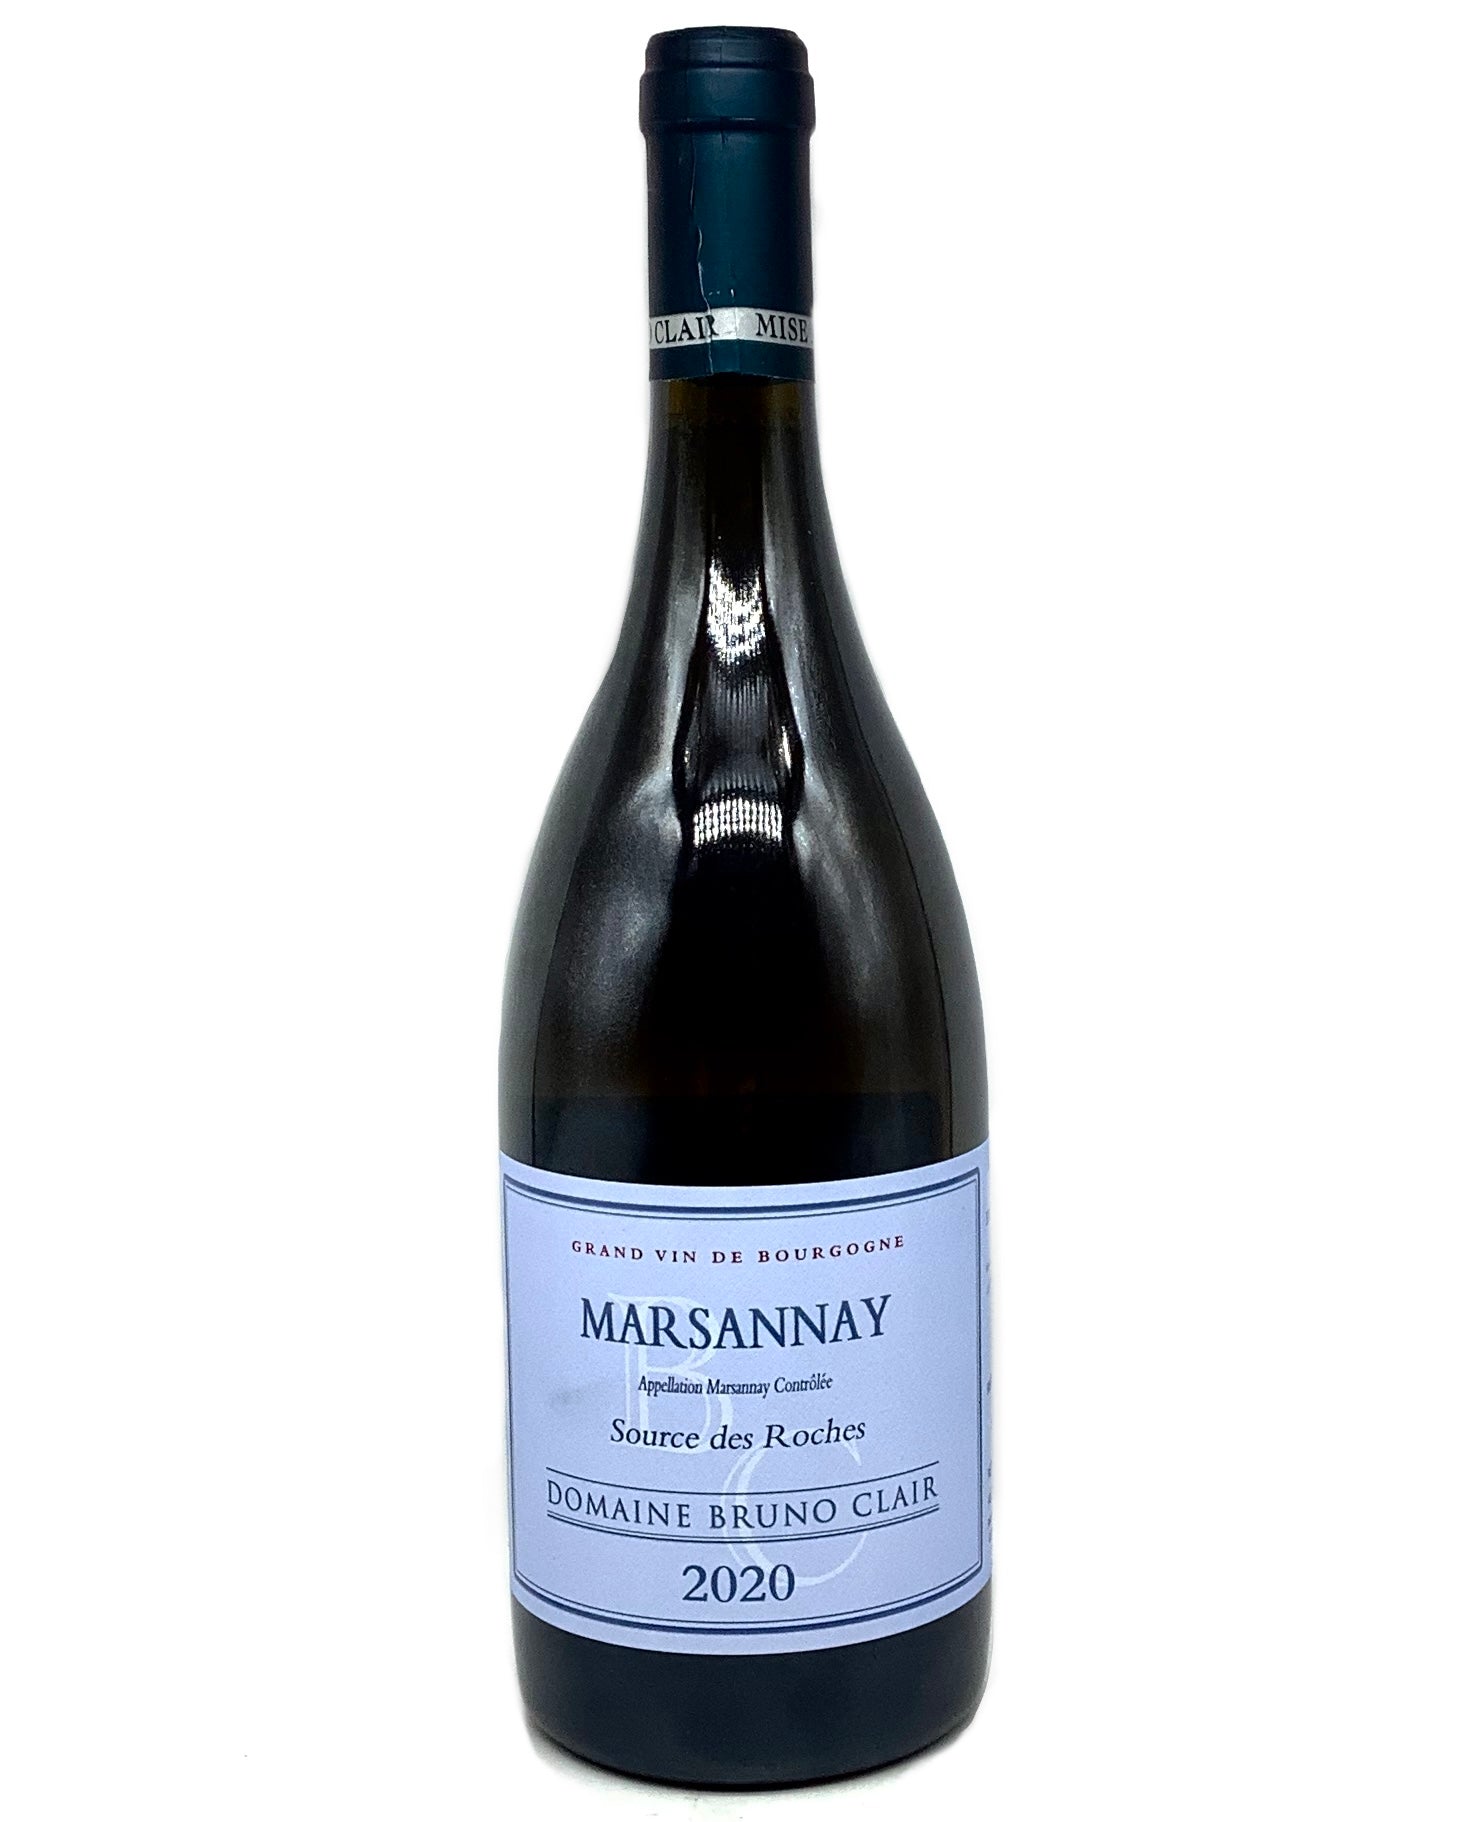 Domaine Bruno Clair, Chardonnay, Marsannay "Source des Roches" Côte de Nuits, Burgundy, France 2020 organic